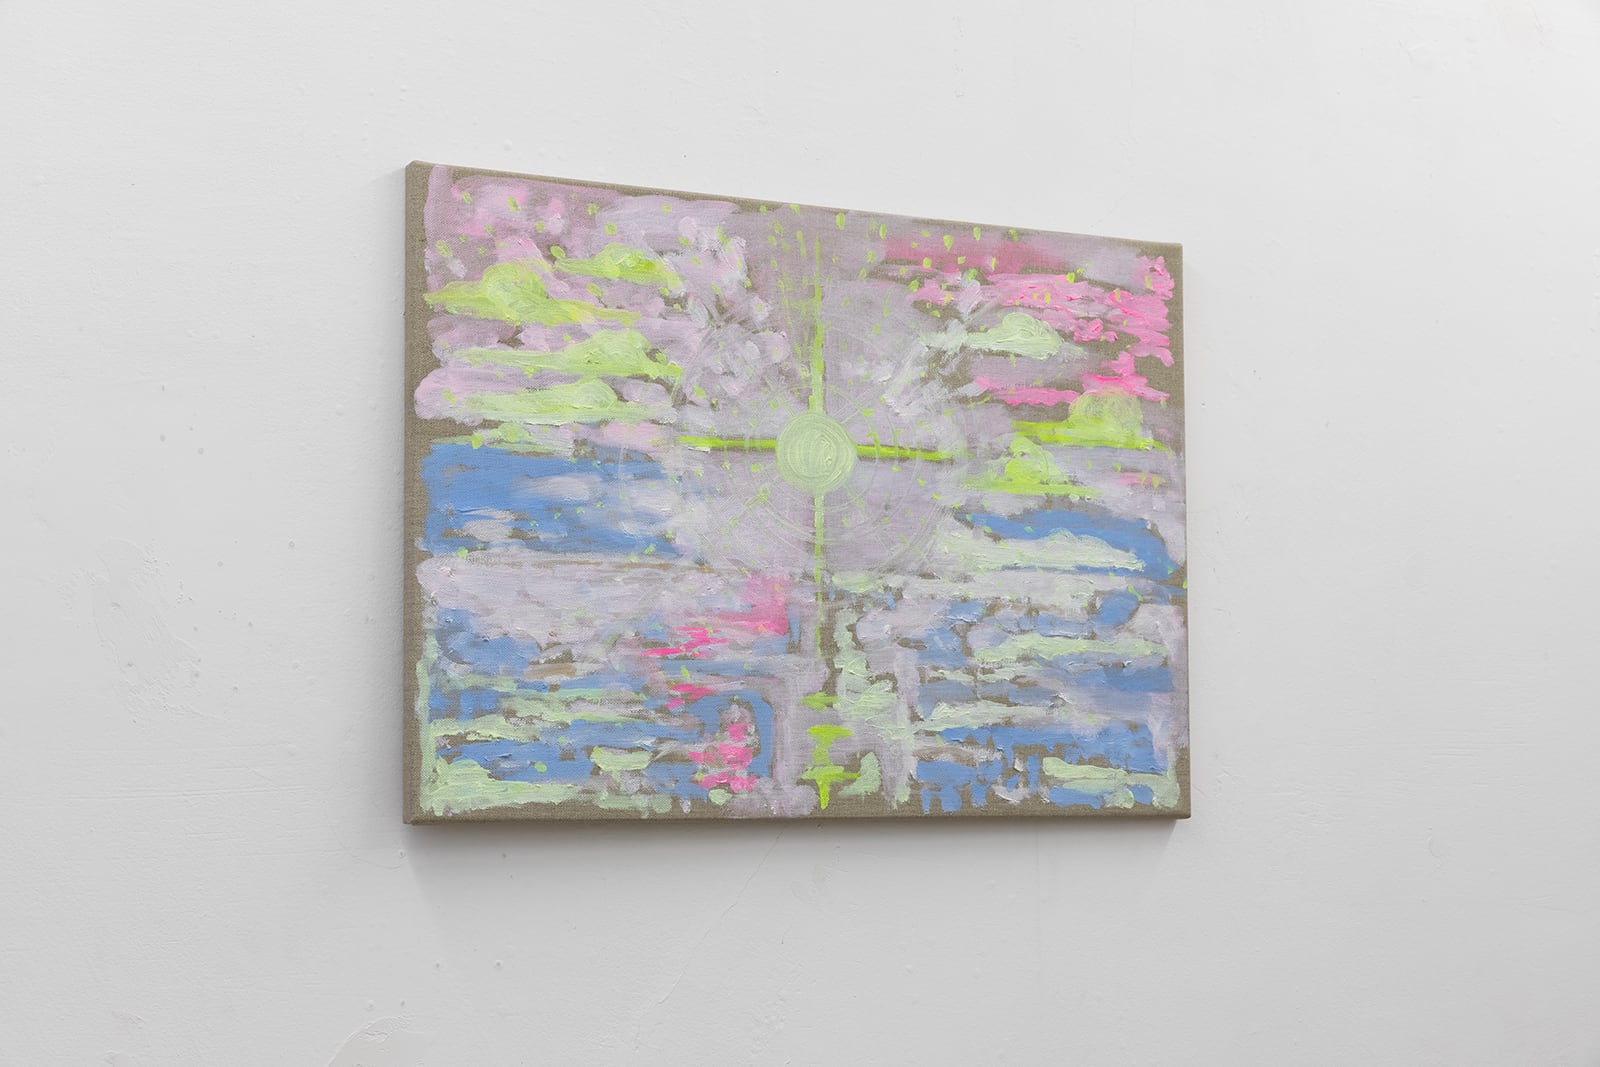 Mira Winding, Morning Star (Ketamine), 2021, oil on canvas 50 x 70 cm